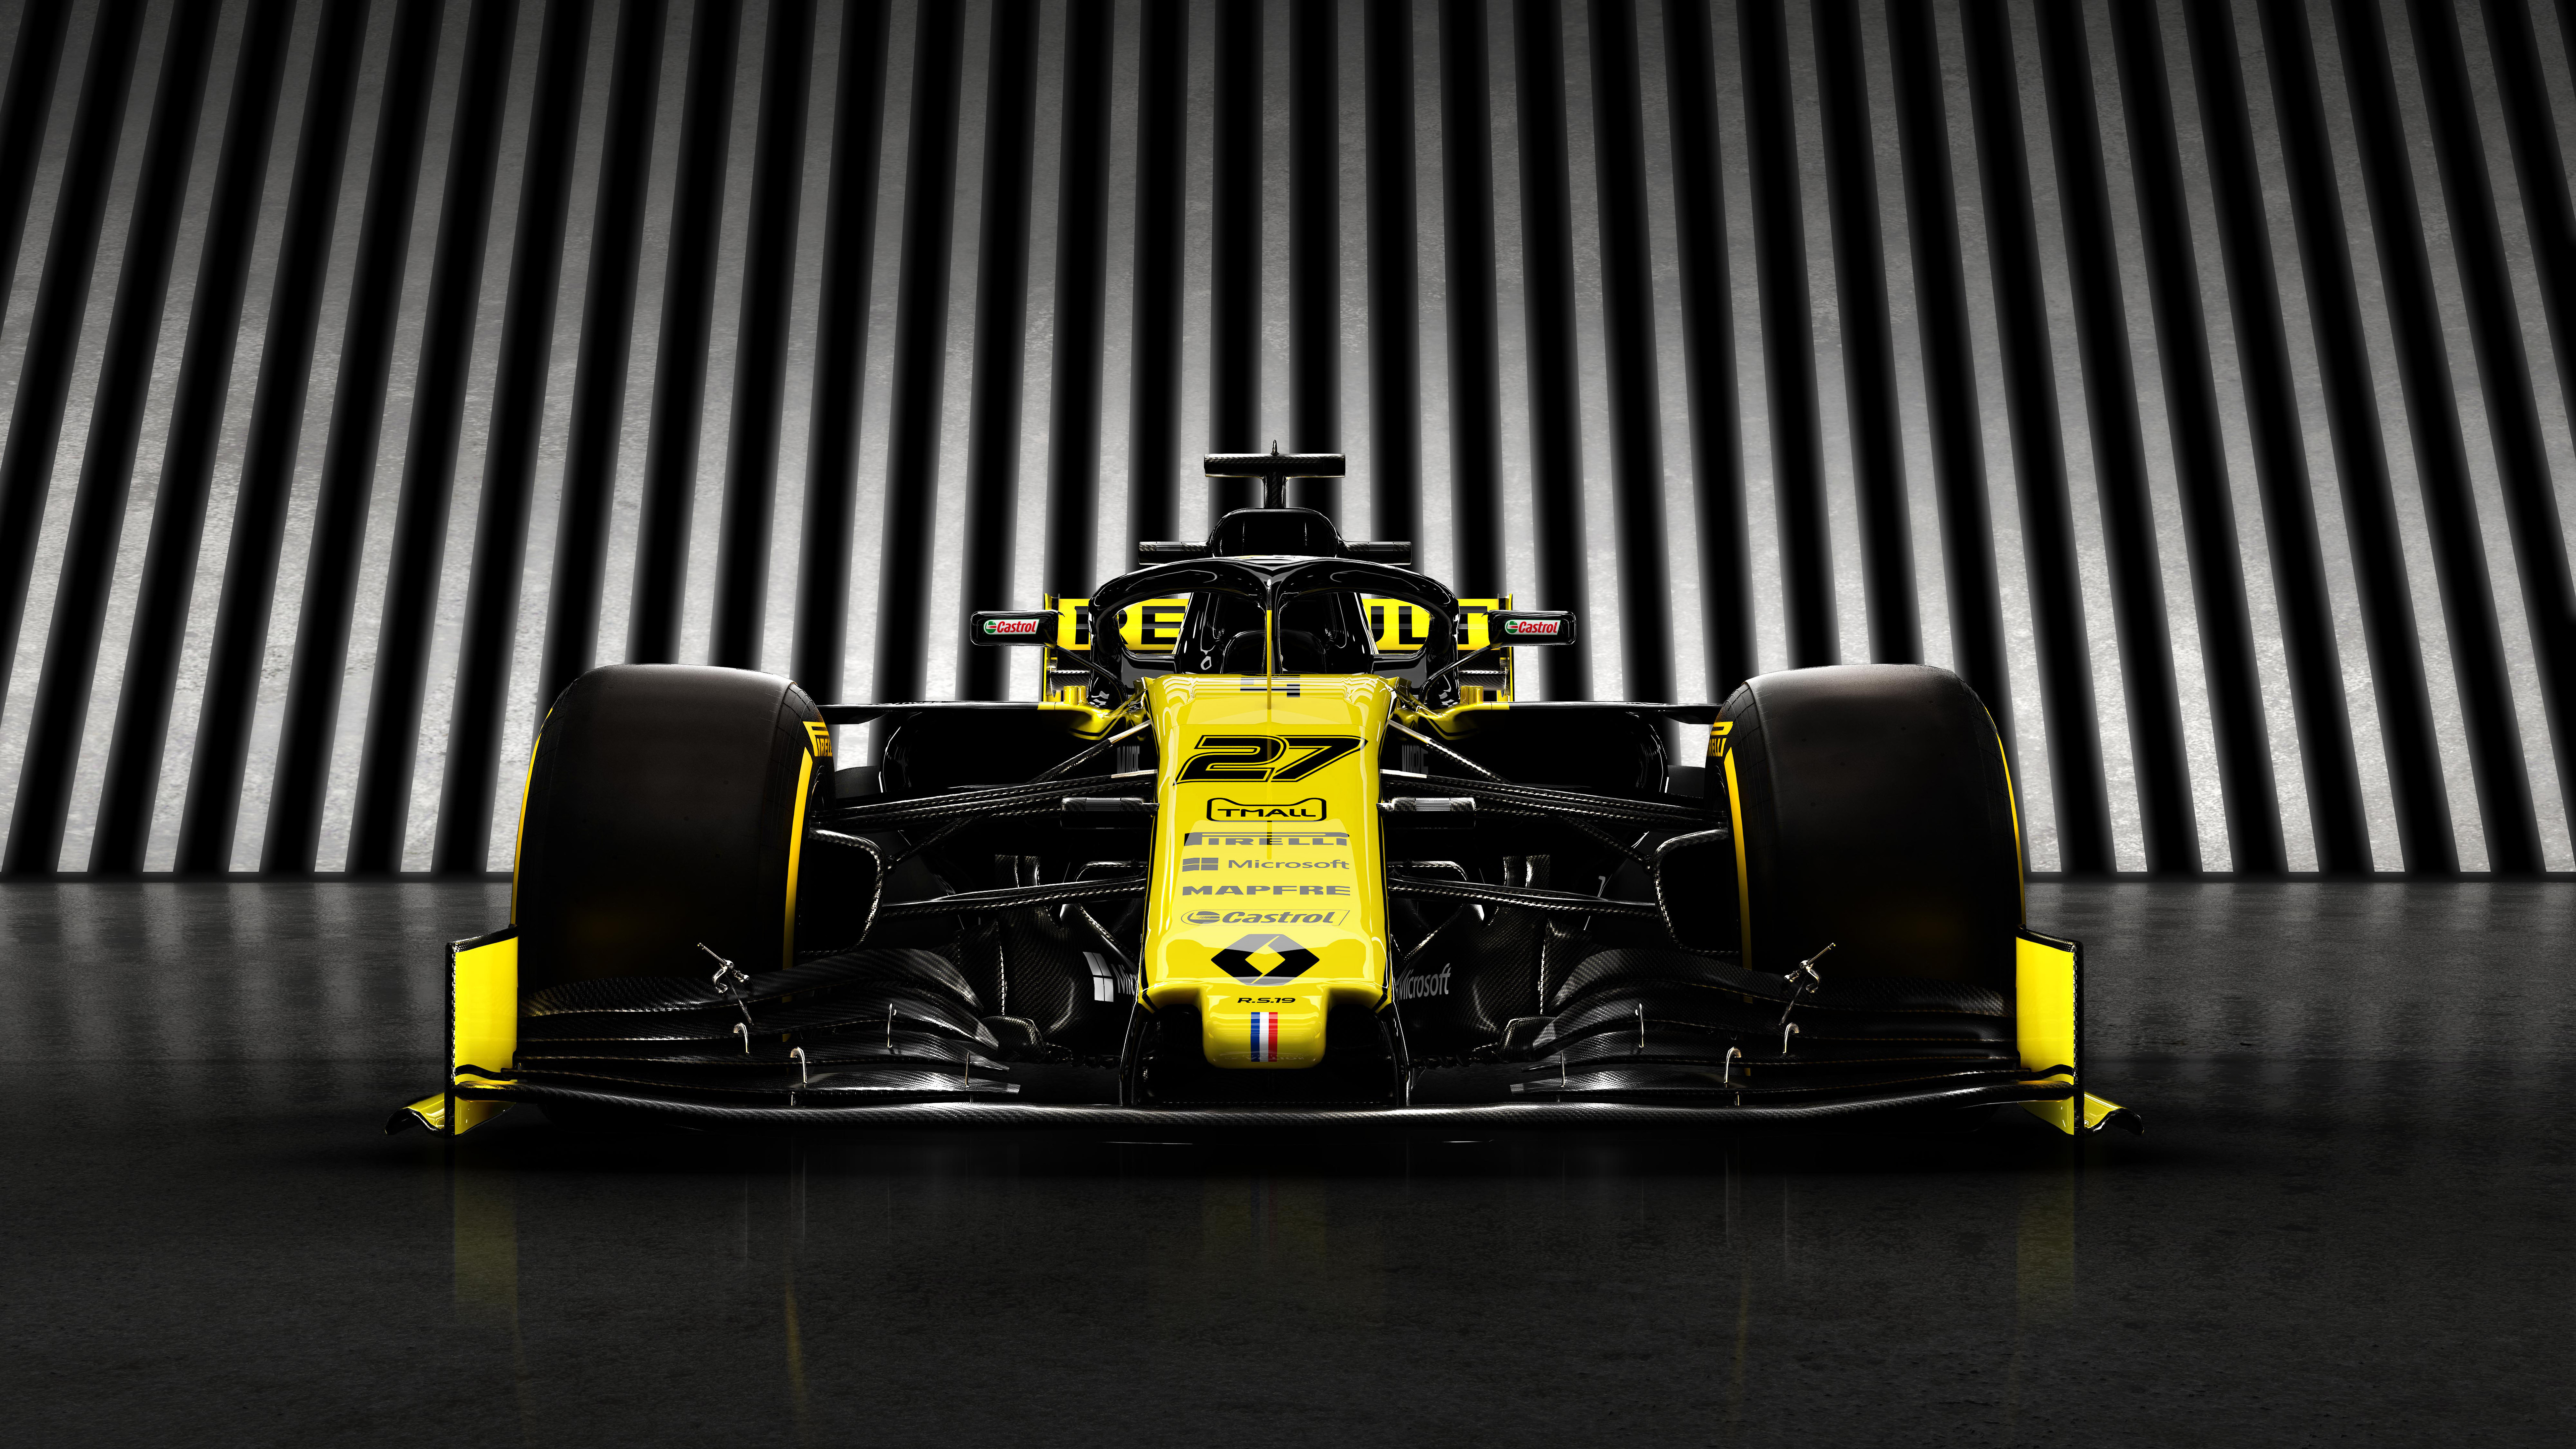 Renault R S 19 Formula 1 2019 Car Yellow Toro Rosso STR14 Daniel Ricciardo Formula Cars Frontal View 7680x4320